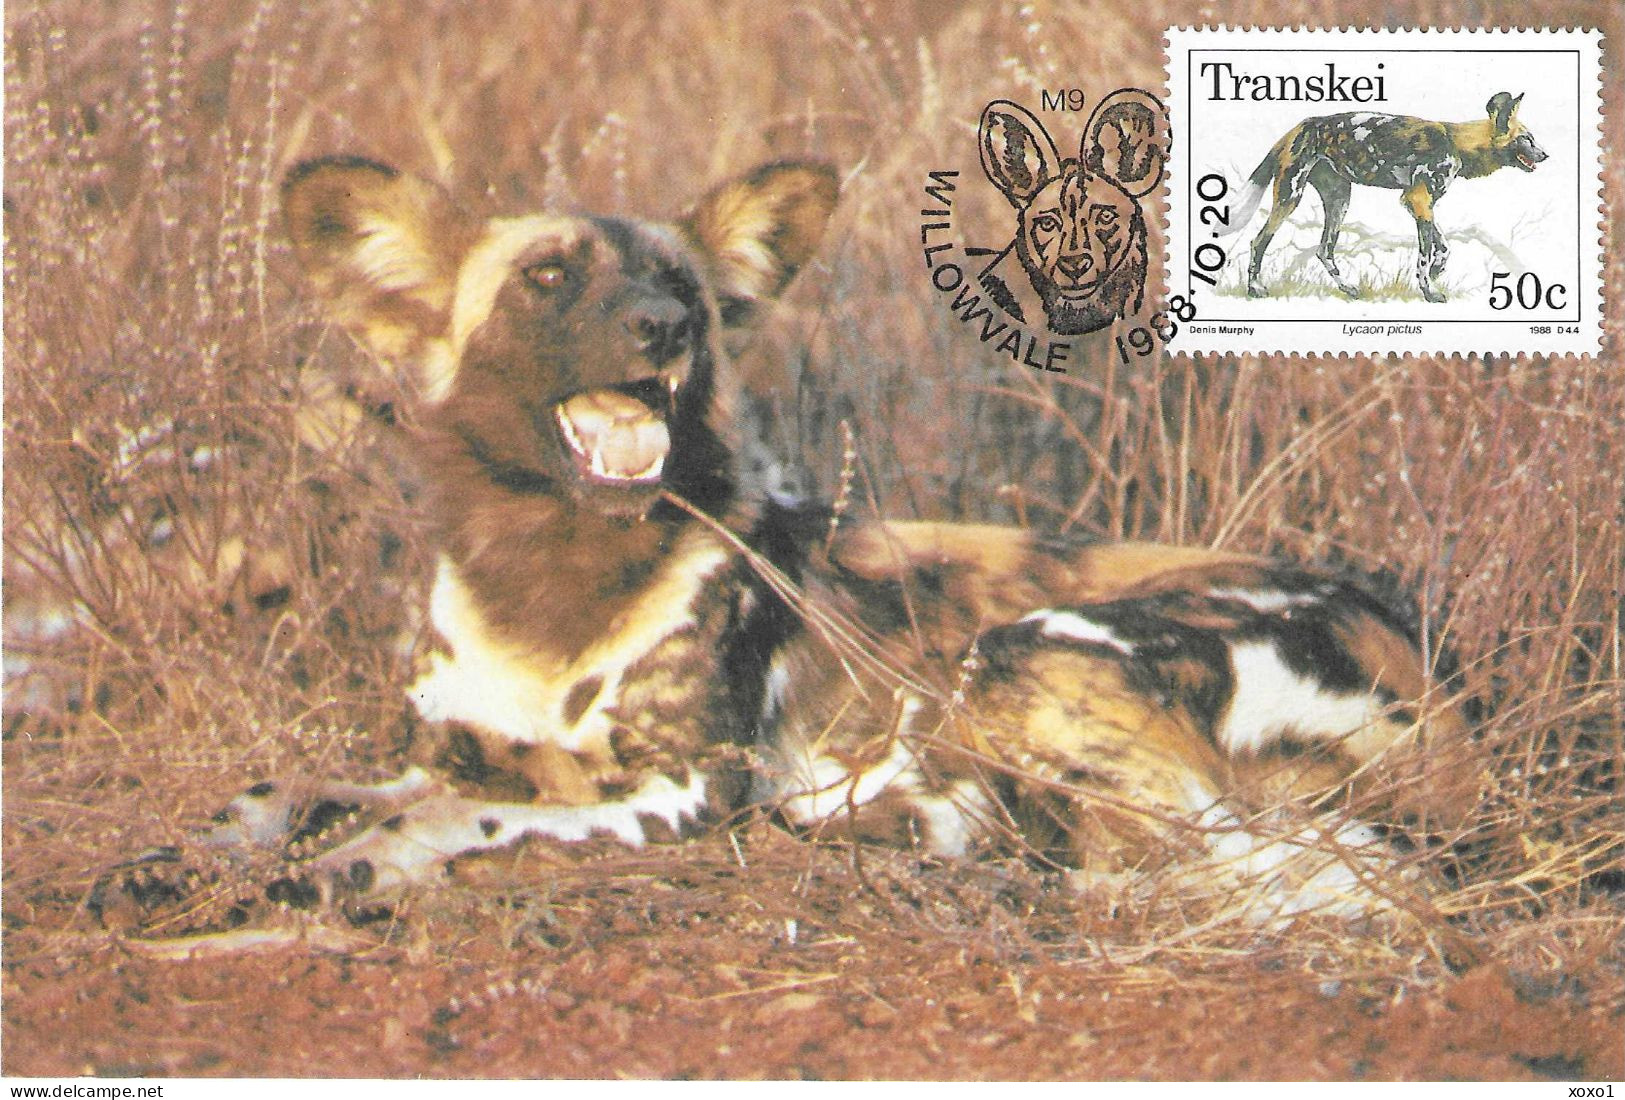 Transkei South Africa 1988 MiNr. 229  Animals  African Wild Dog (Lycaon Pictus) MC 1.80 € - Hunde